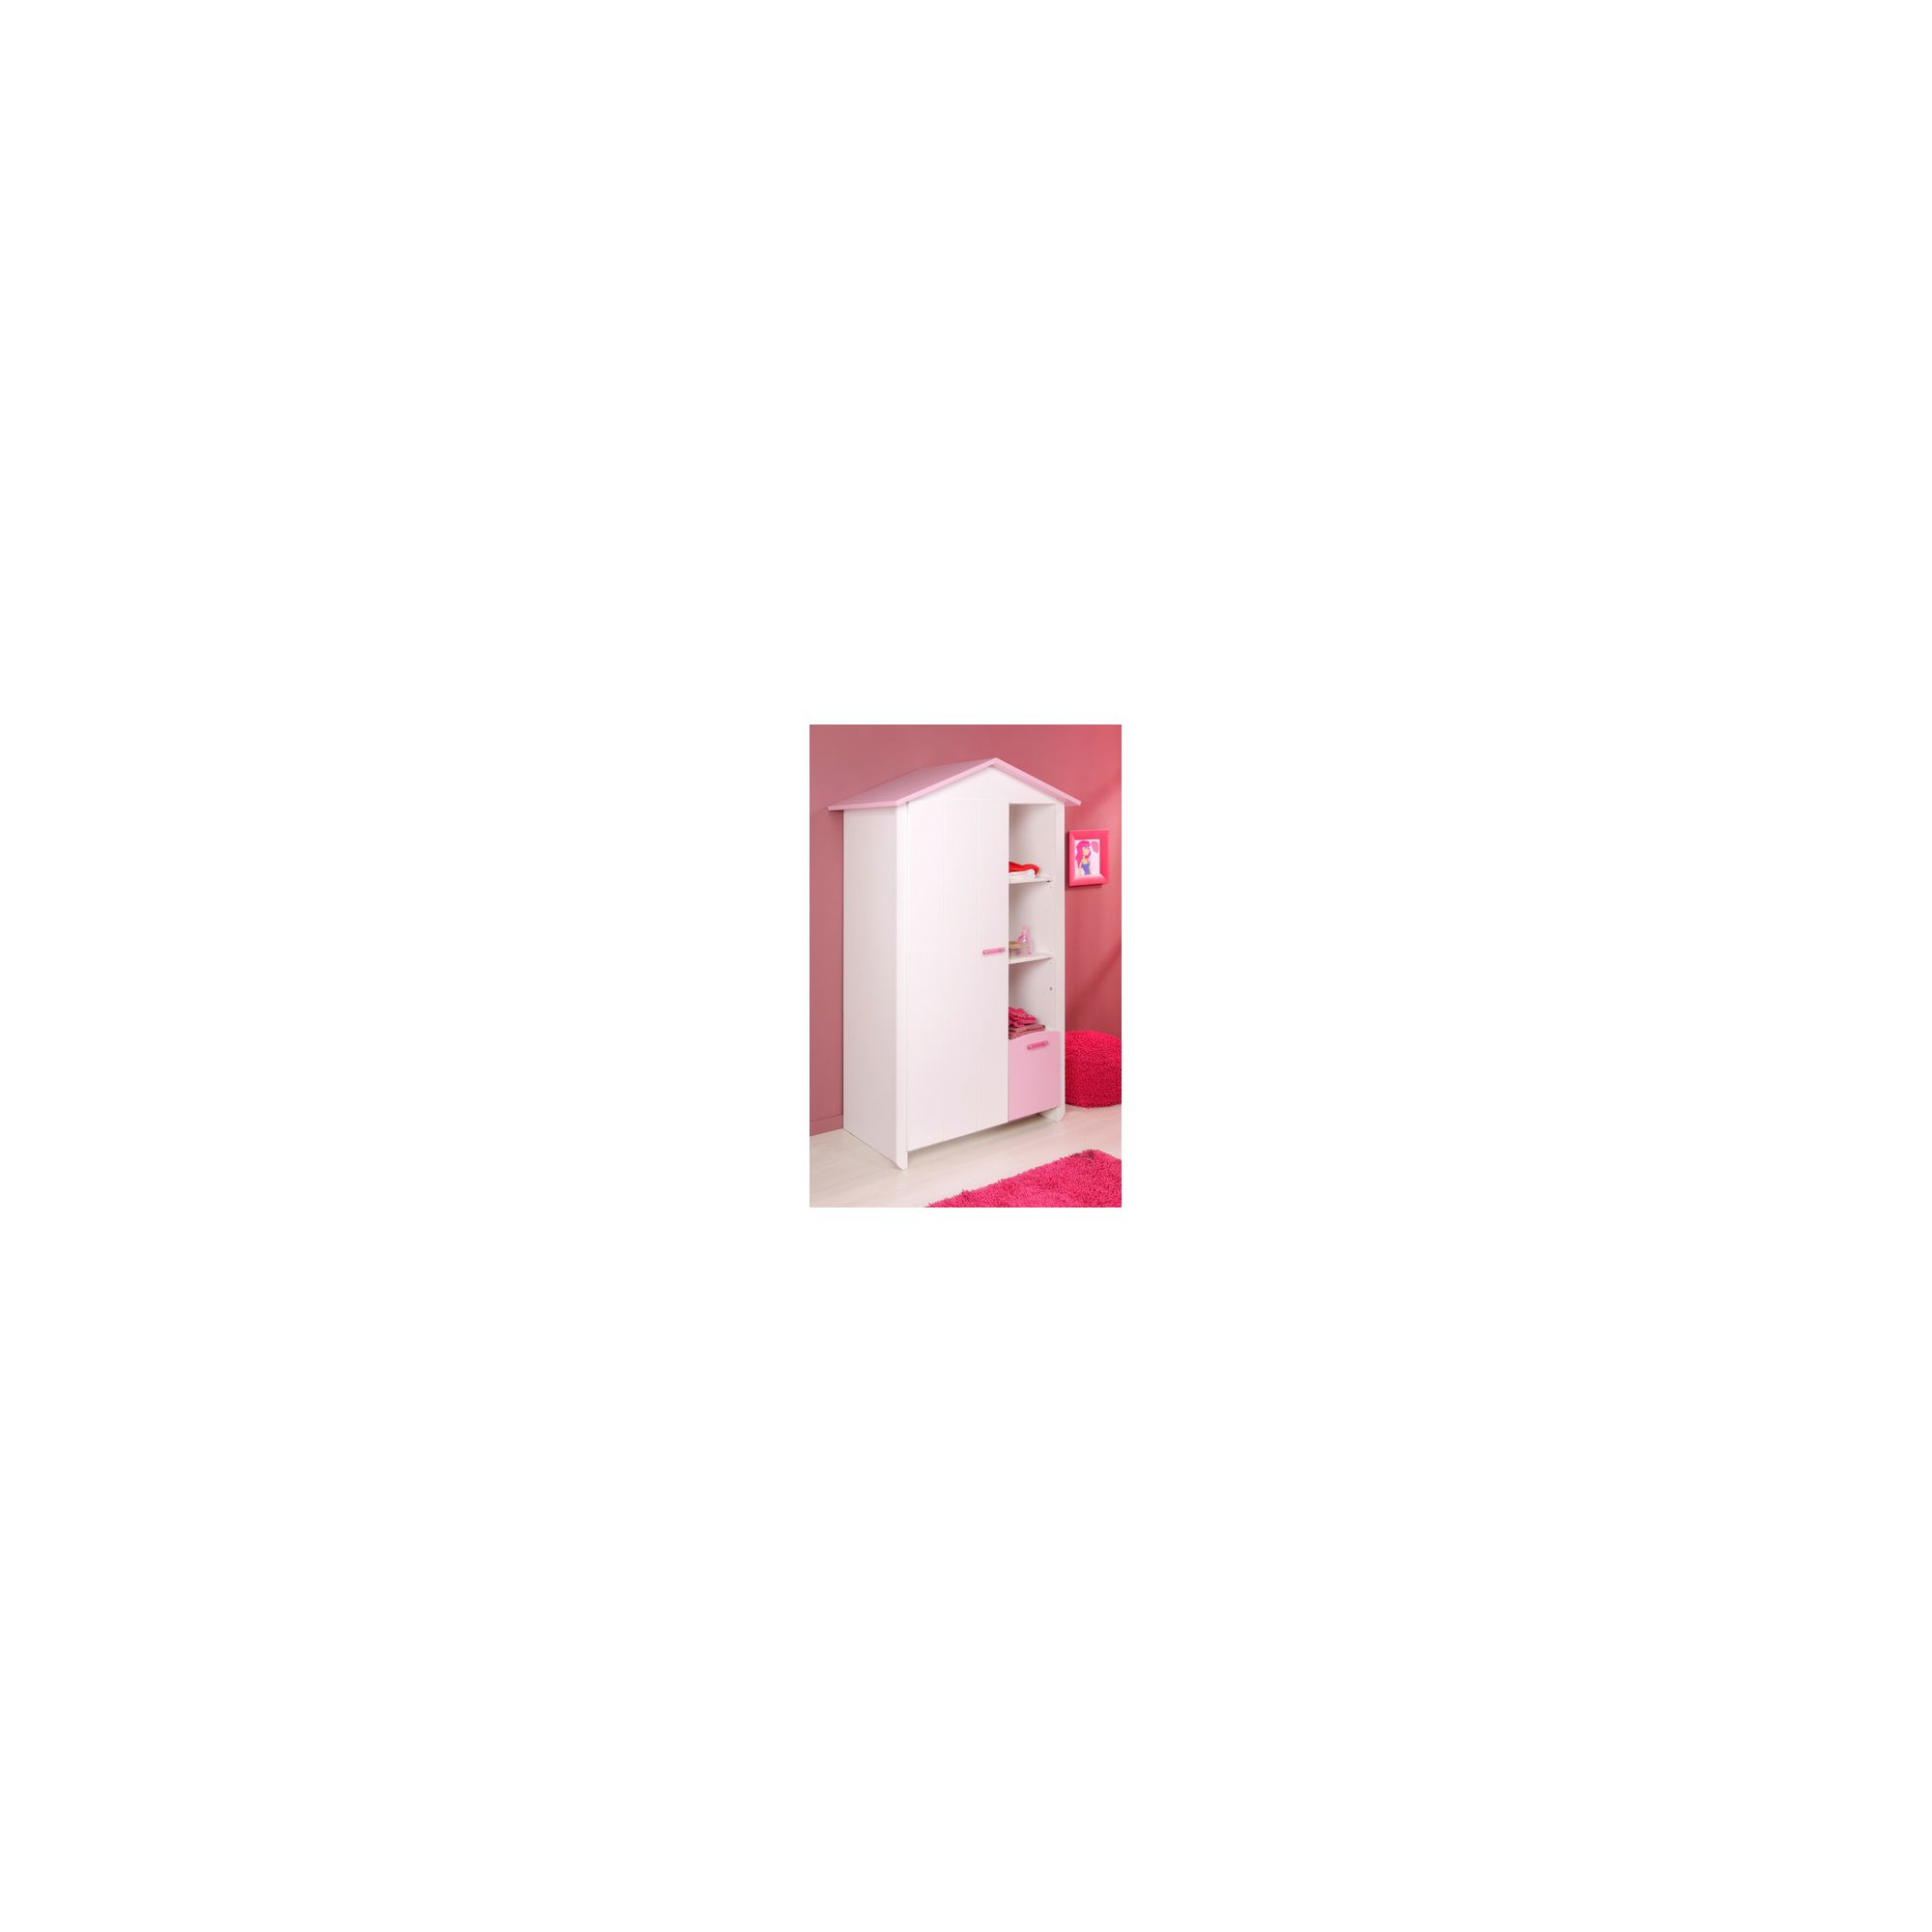 Parisot Biotiful Wardrobe with Storage Boxes - Megeve White / Indian Pink at Tesco Direct